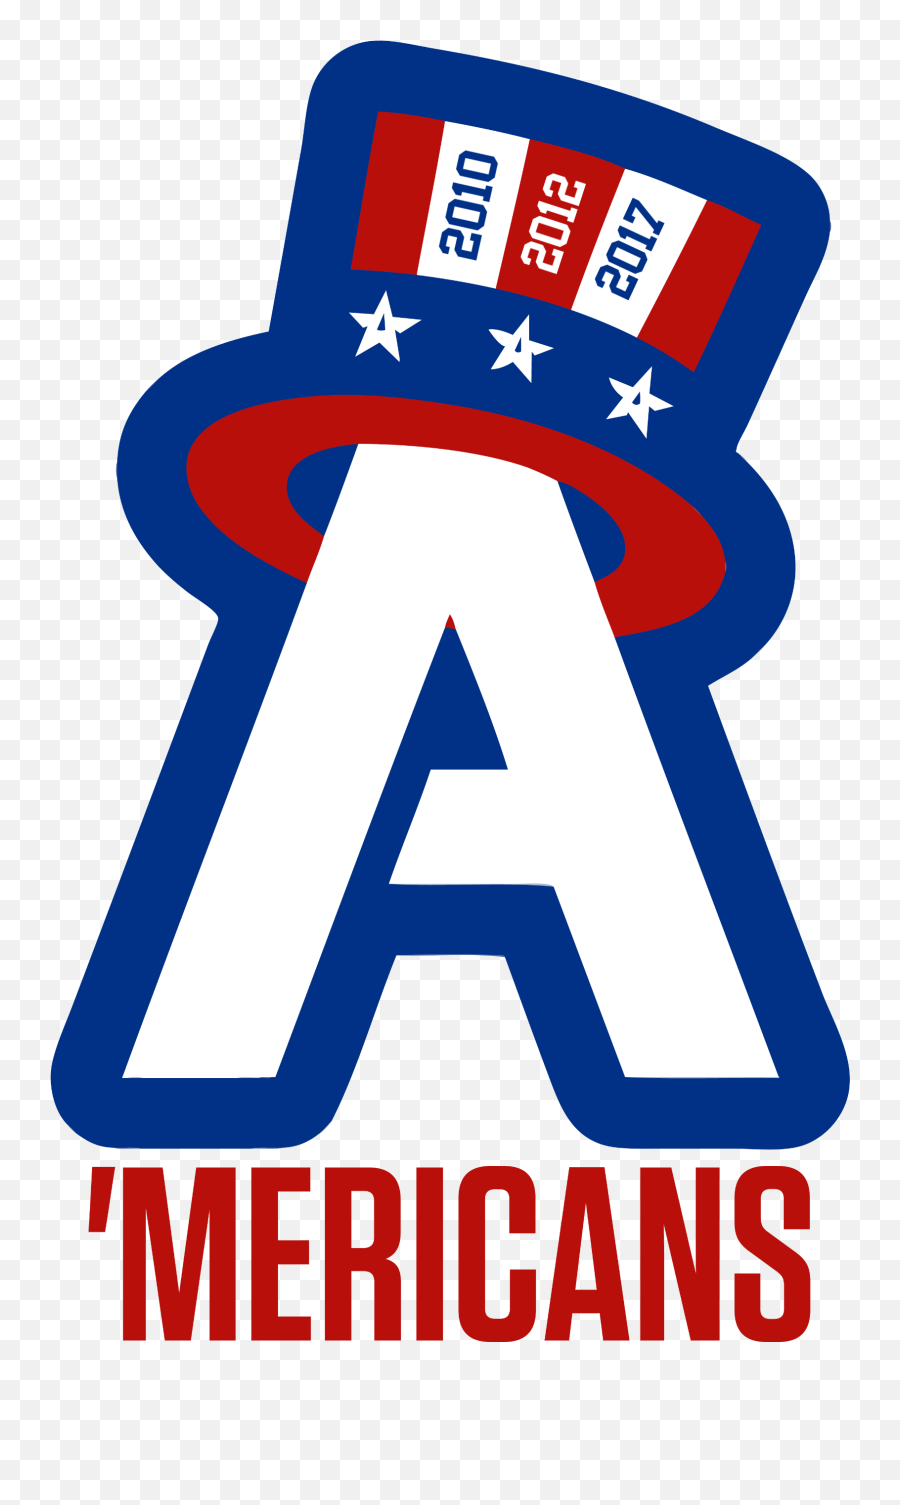 Arrogant Americans - The Oil Fantasy Football And Veteran Americans Logo Emoji,Fantasy Football Logos